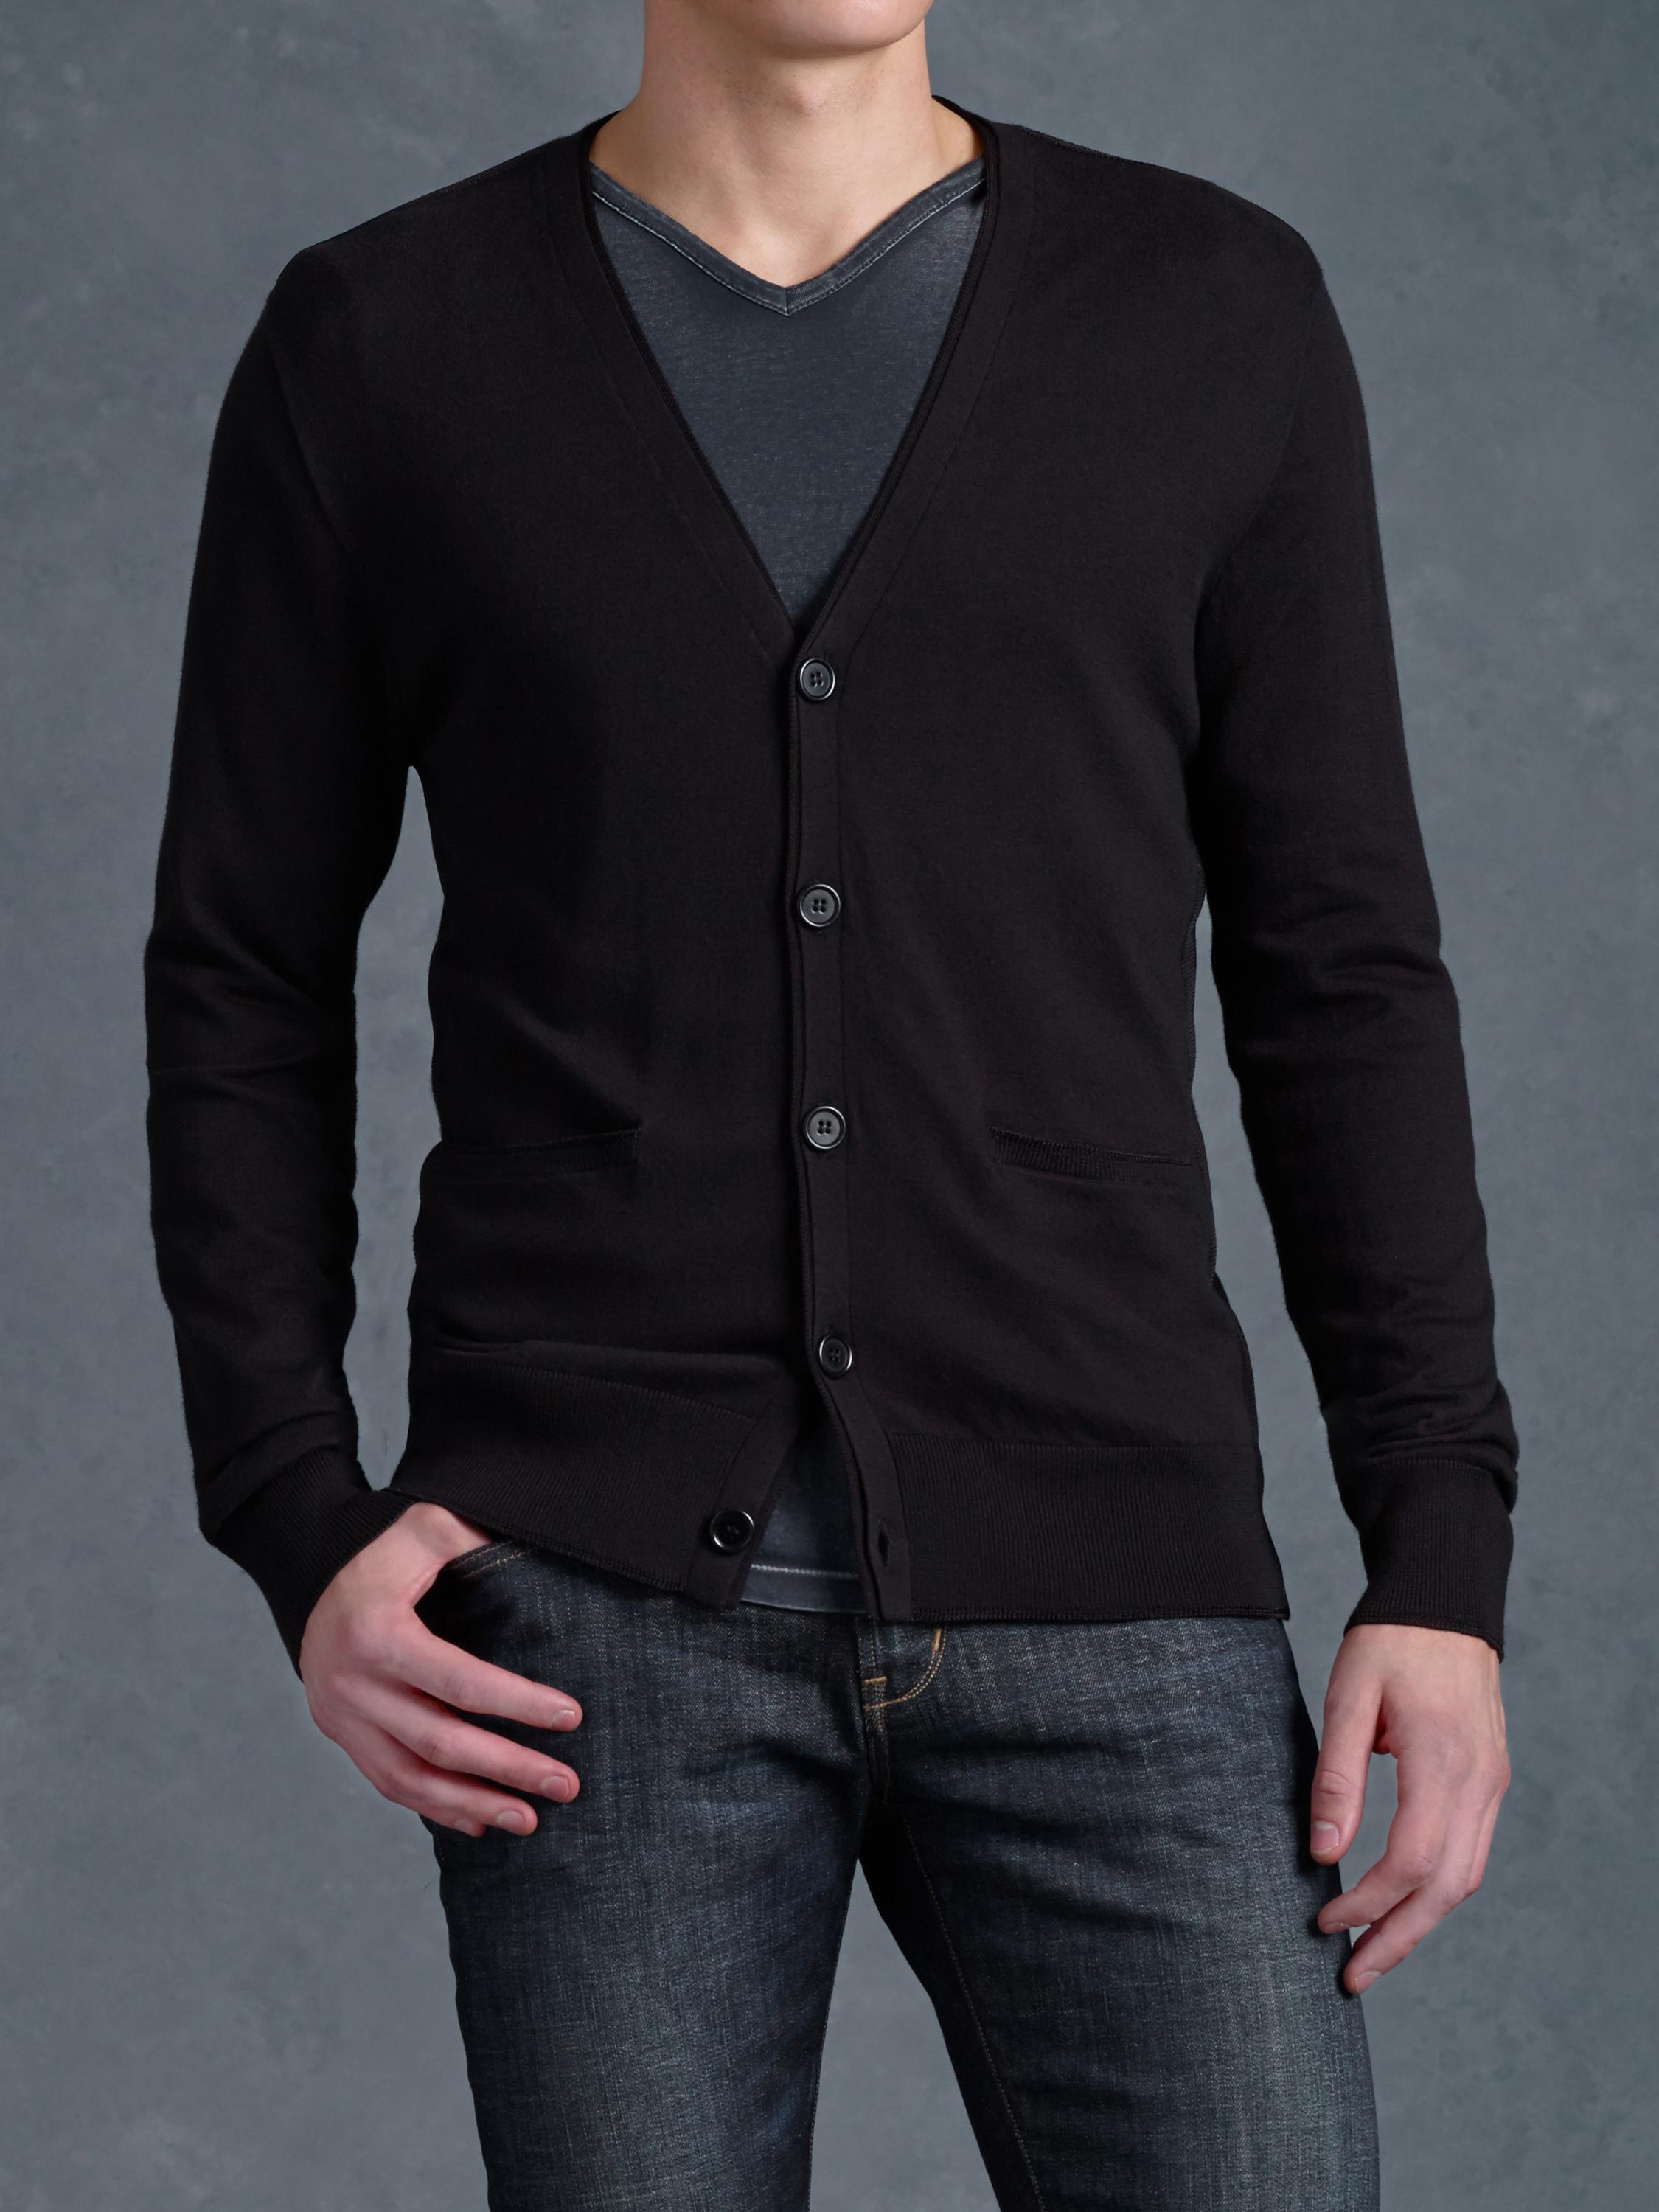 Lyst - John Varvatos Button Front Cardigan Sweater in Black for Men